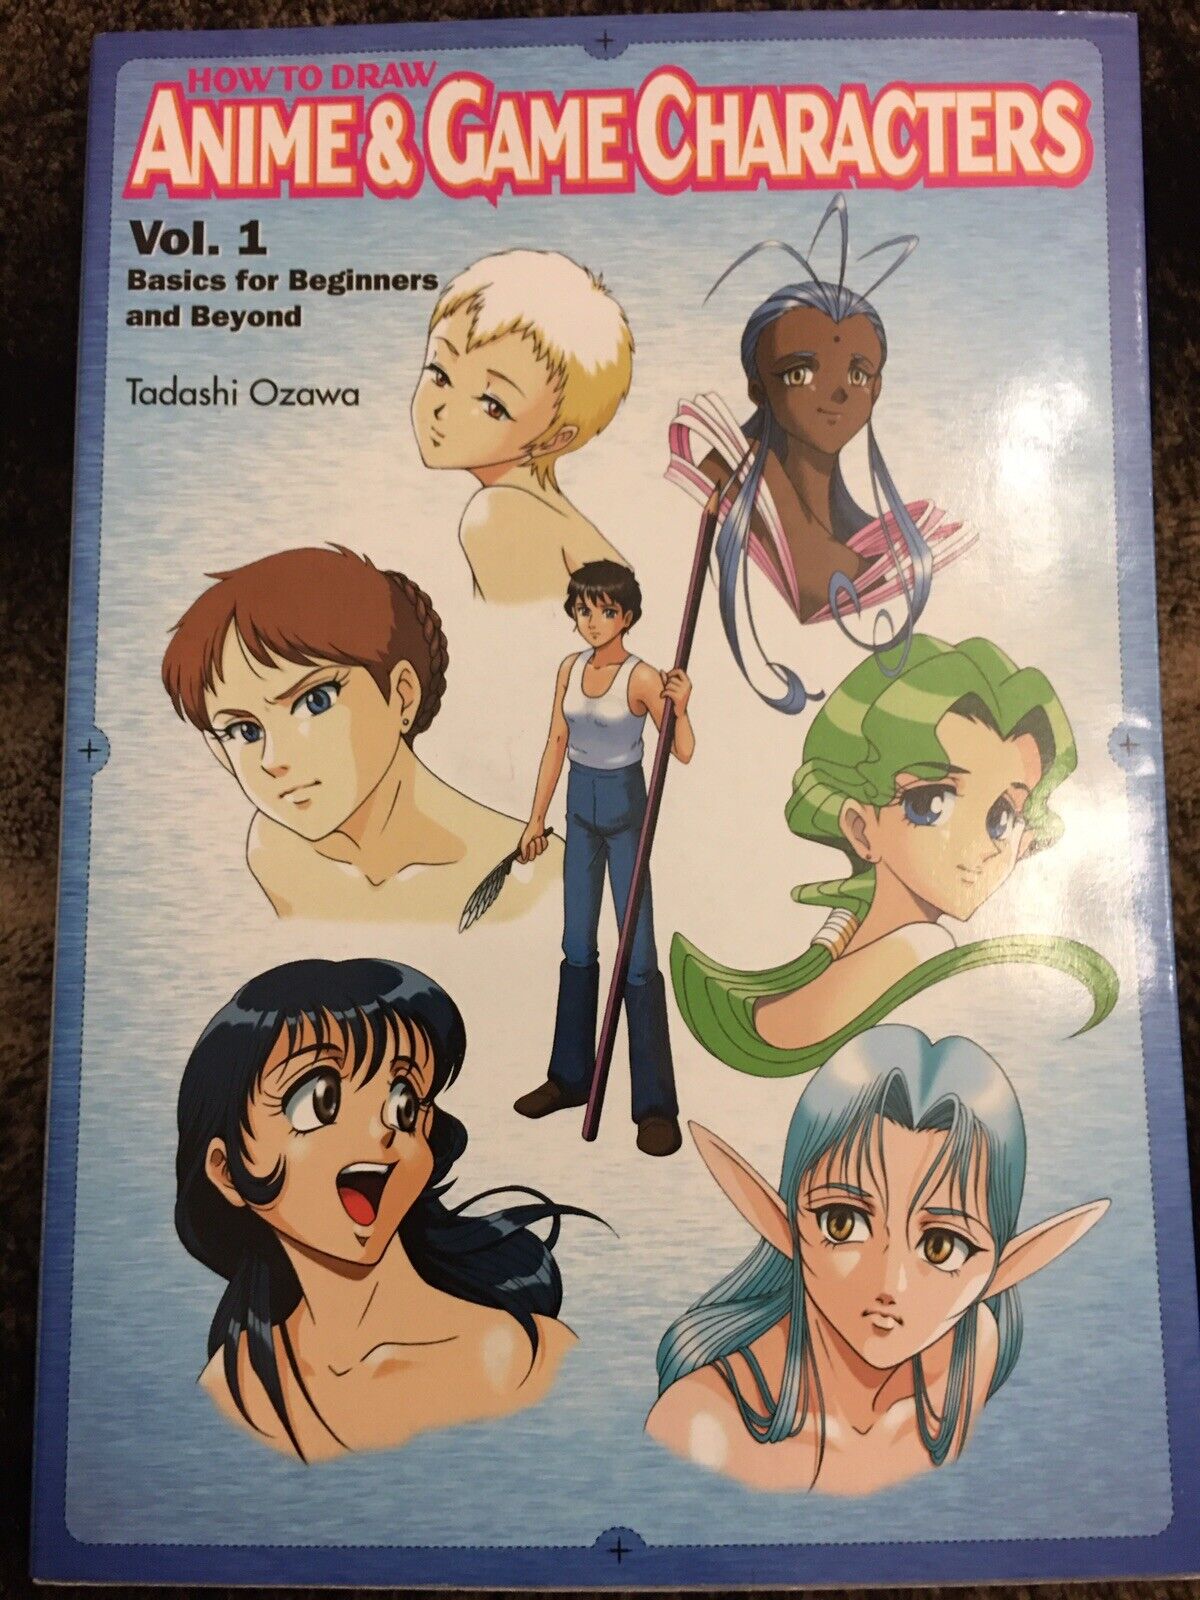 How To Draw Anime & Game Characters Vol. 1 by Tadashi Ozawa (Paperback) |  eBay